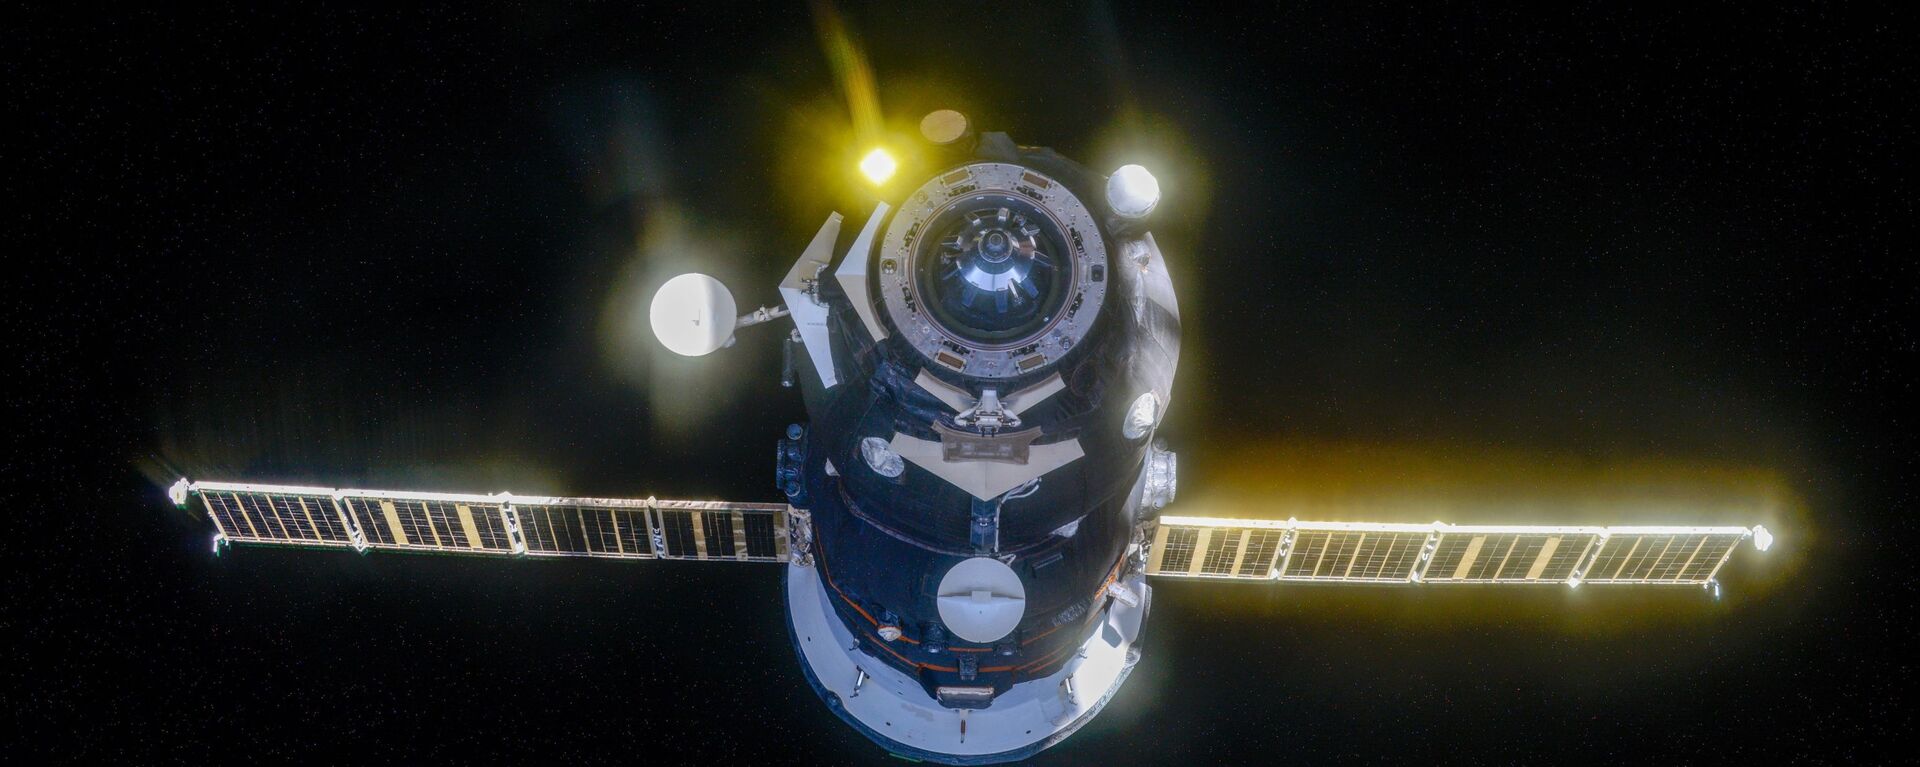 El carguero espacial ruso Progress MS-13 - Sputnik Mundo, 1920, 26.07.2021